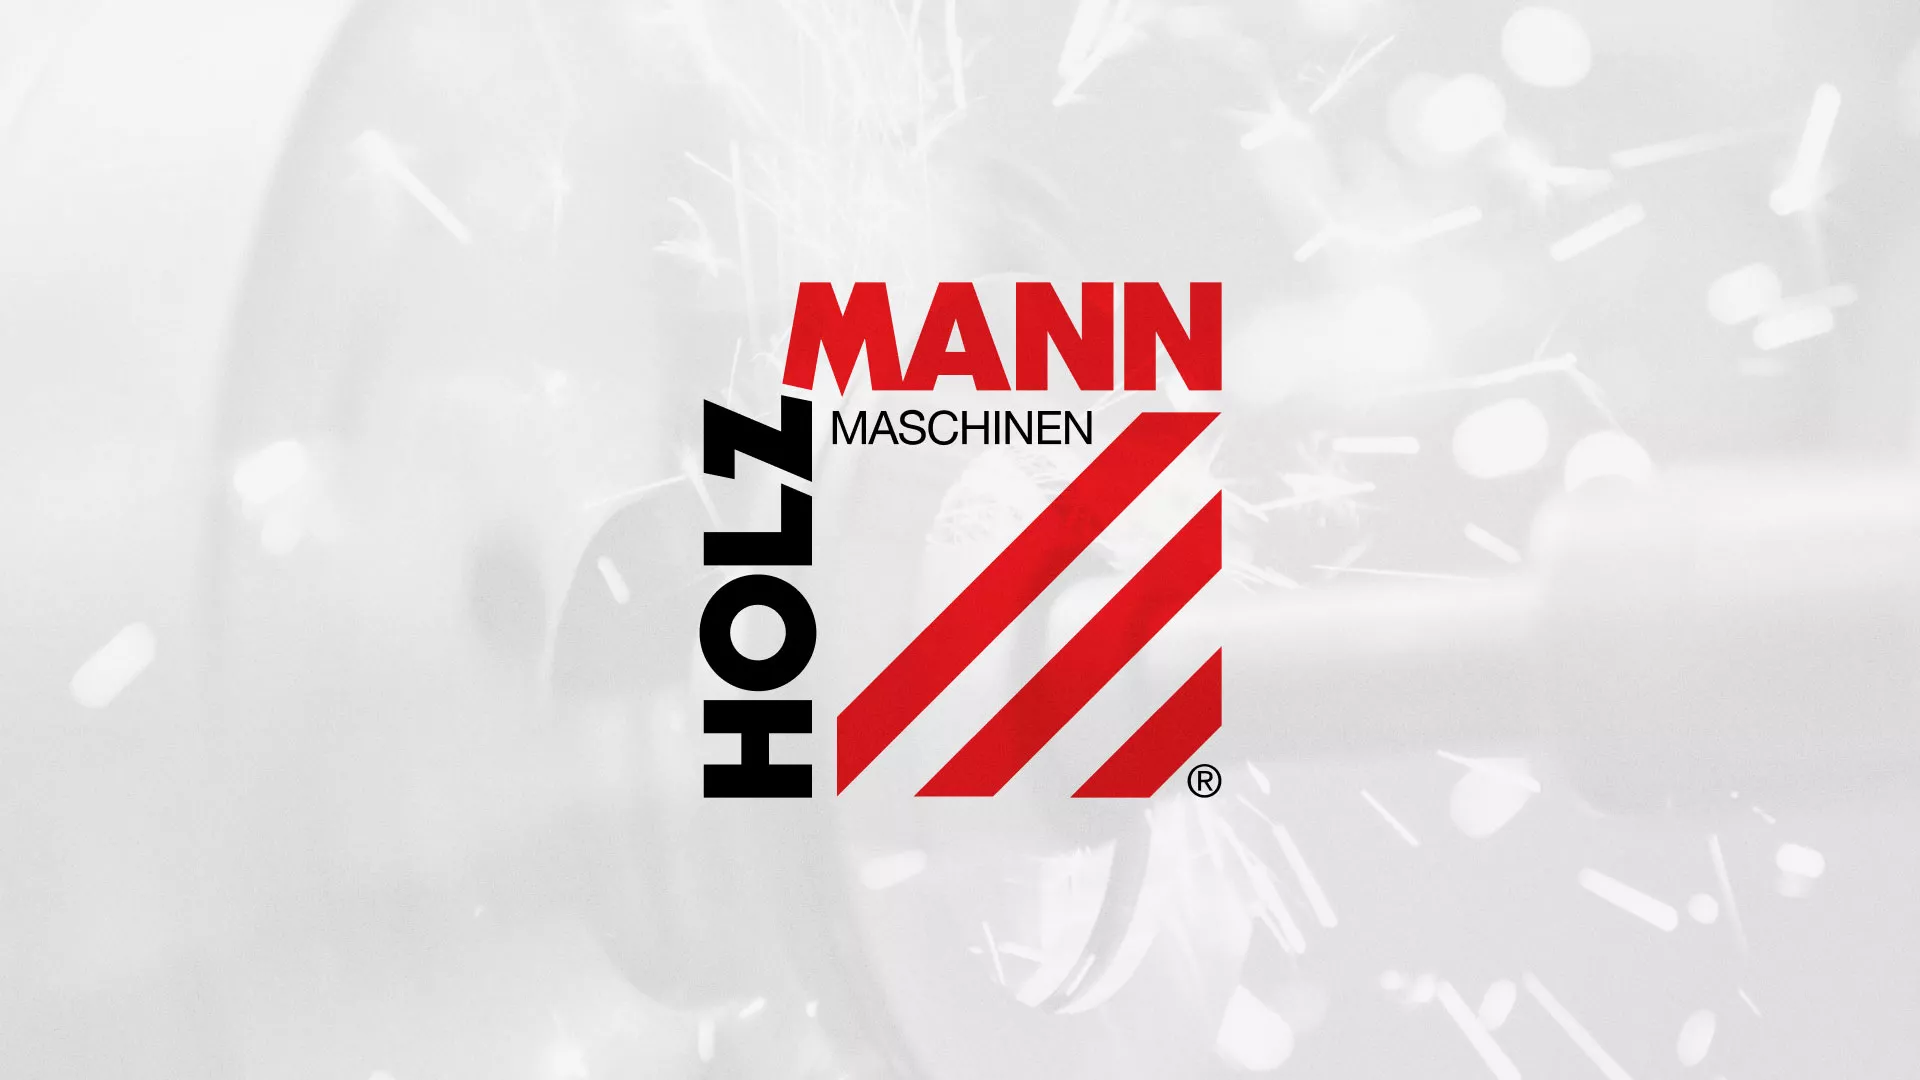 Создание сайта компании «HOLZMANN Maschinen GmbH» в Семикаракорске